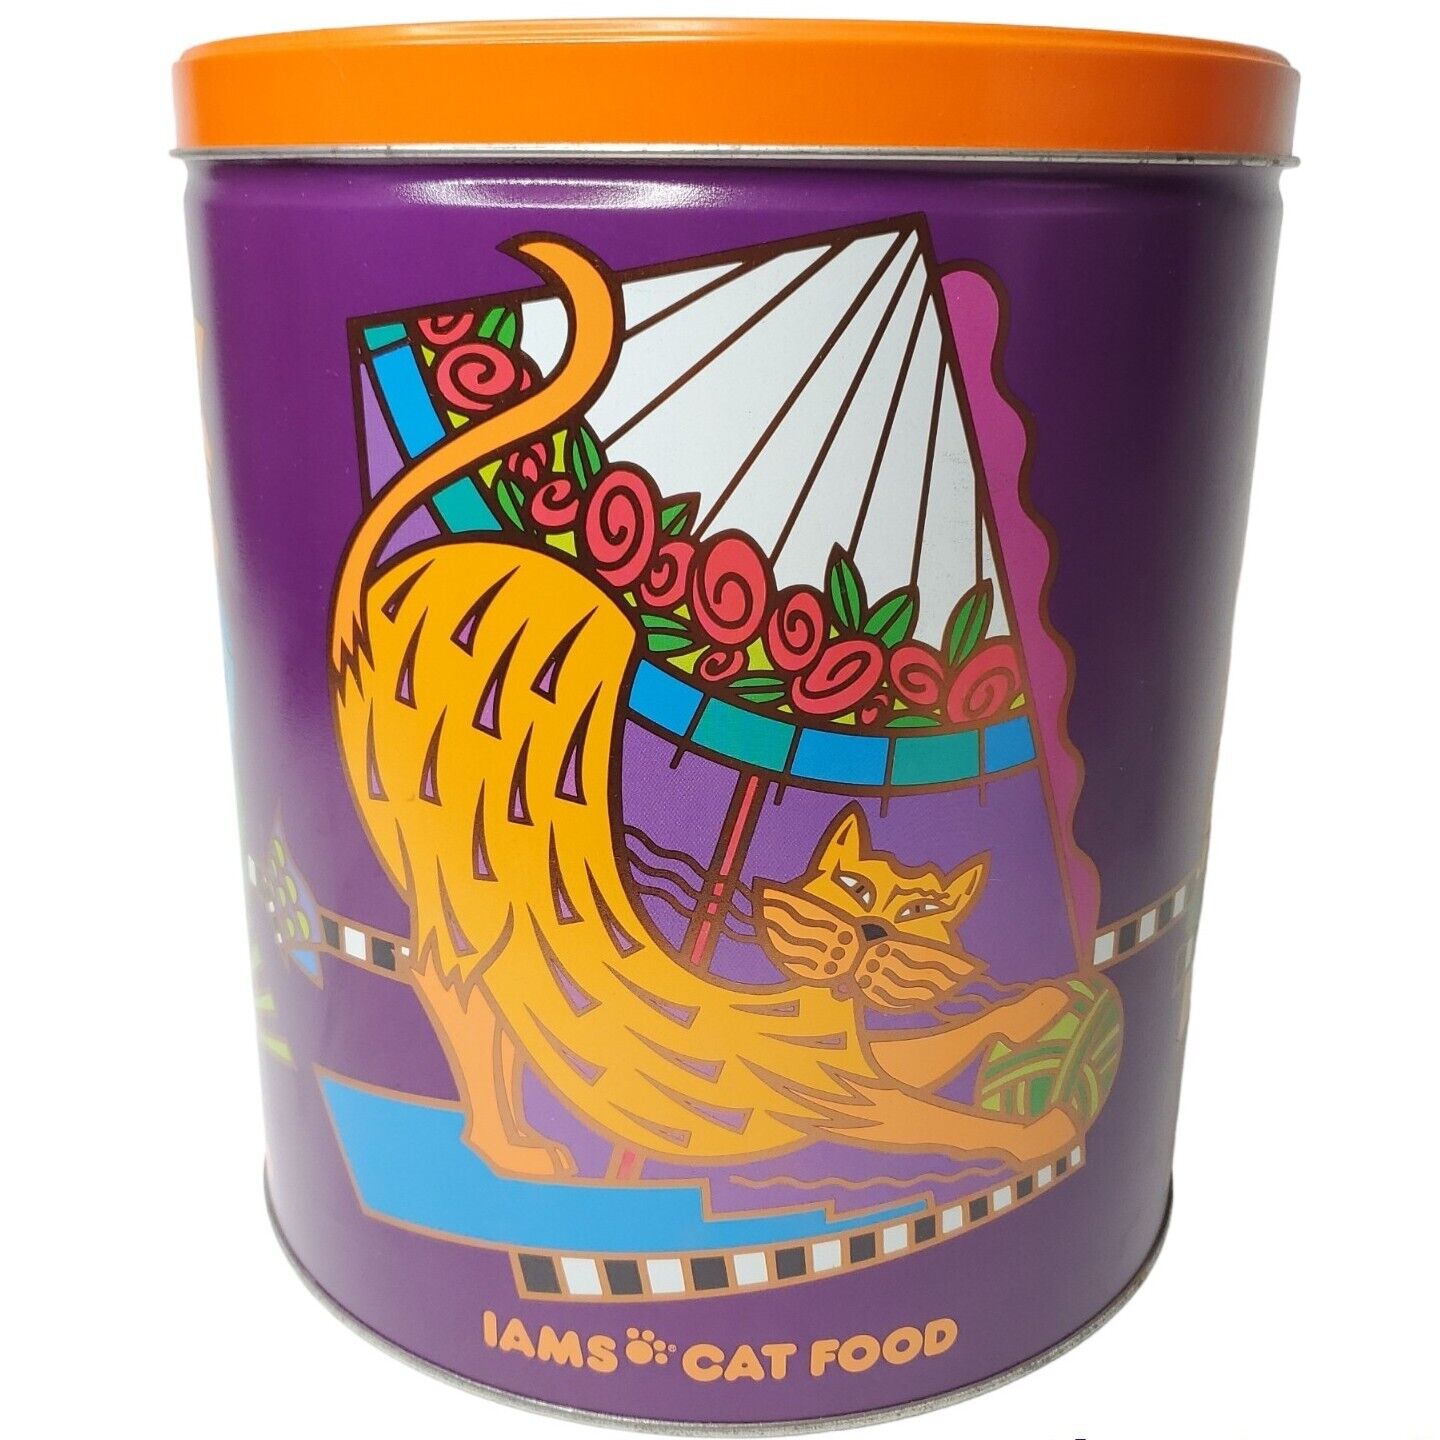 Iams Cat Food Large Tin Metal Storage Canister 11 X 10 Retro Art Cats 1993 Lot 1